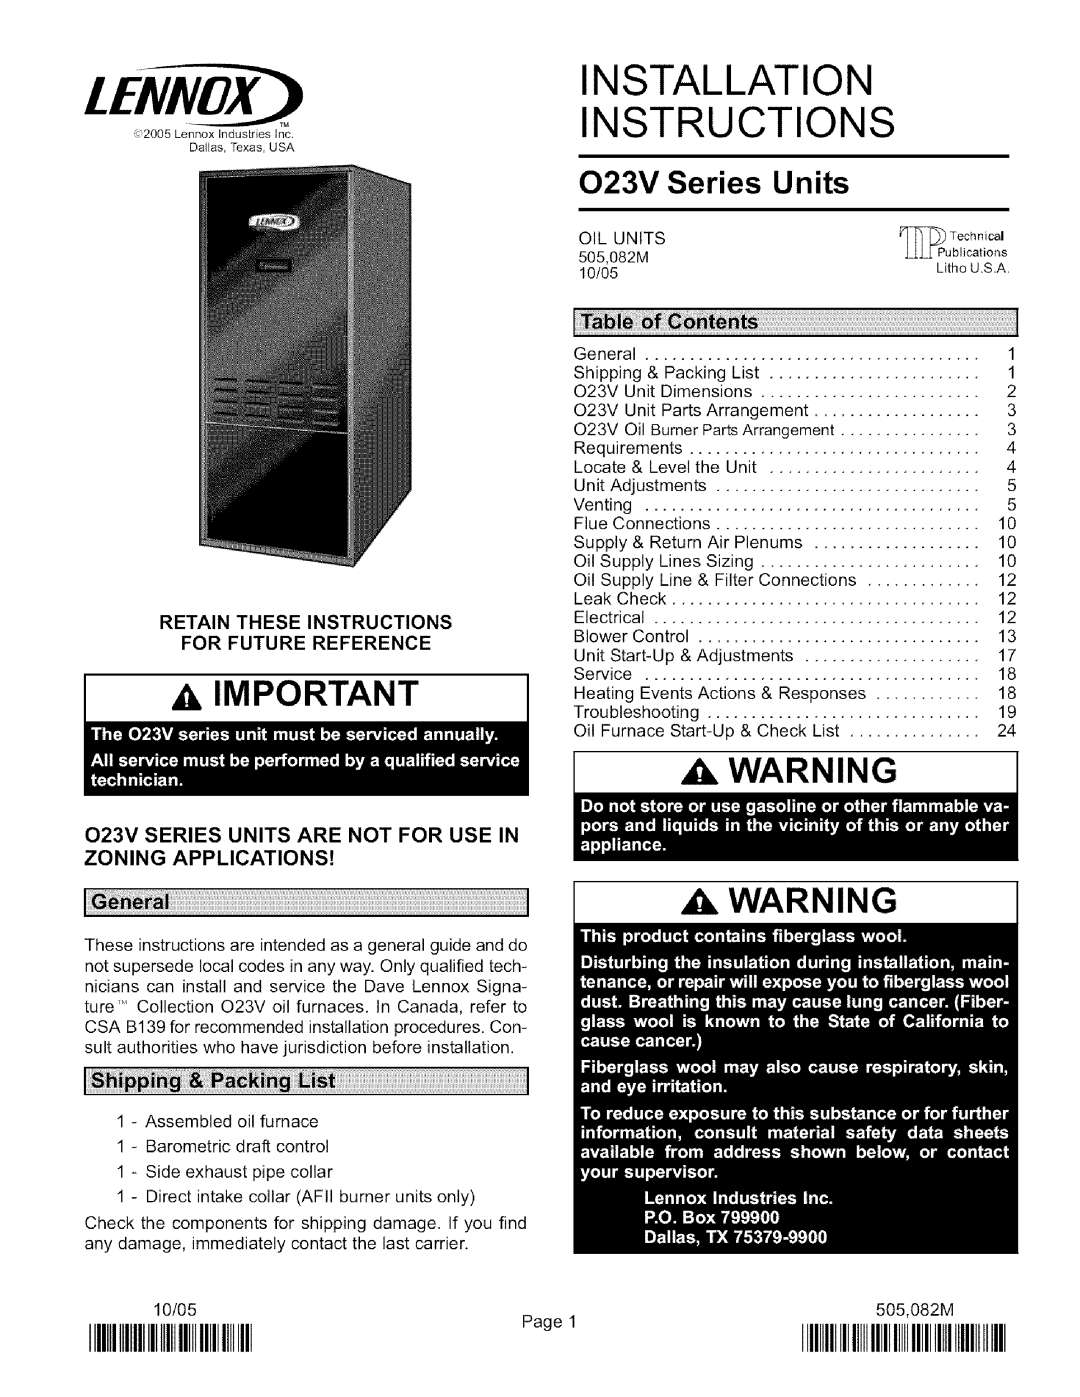 Lennox International Inc O23V5-154 installation instructions A Important, a WARNING, Installation Instructions, Units 